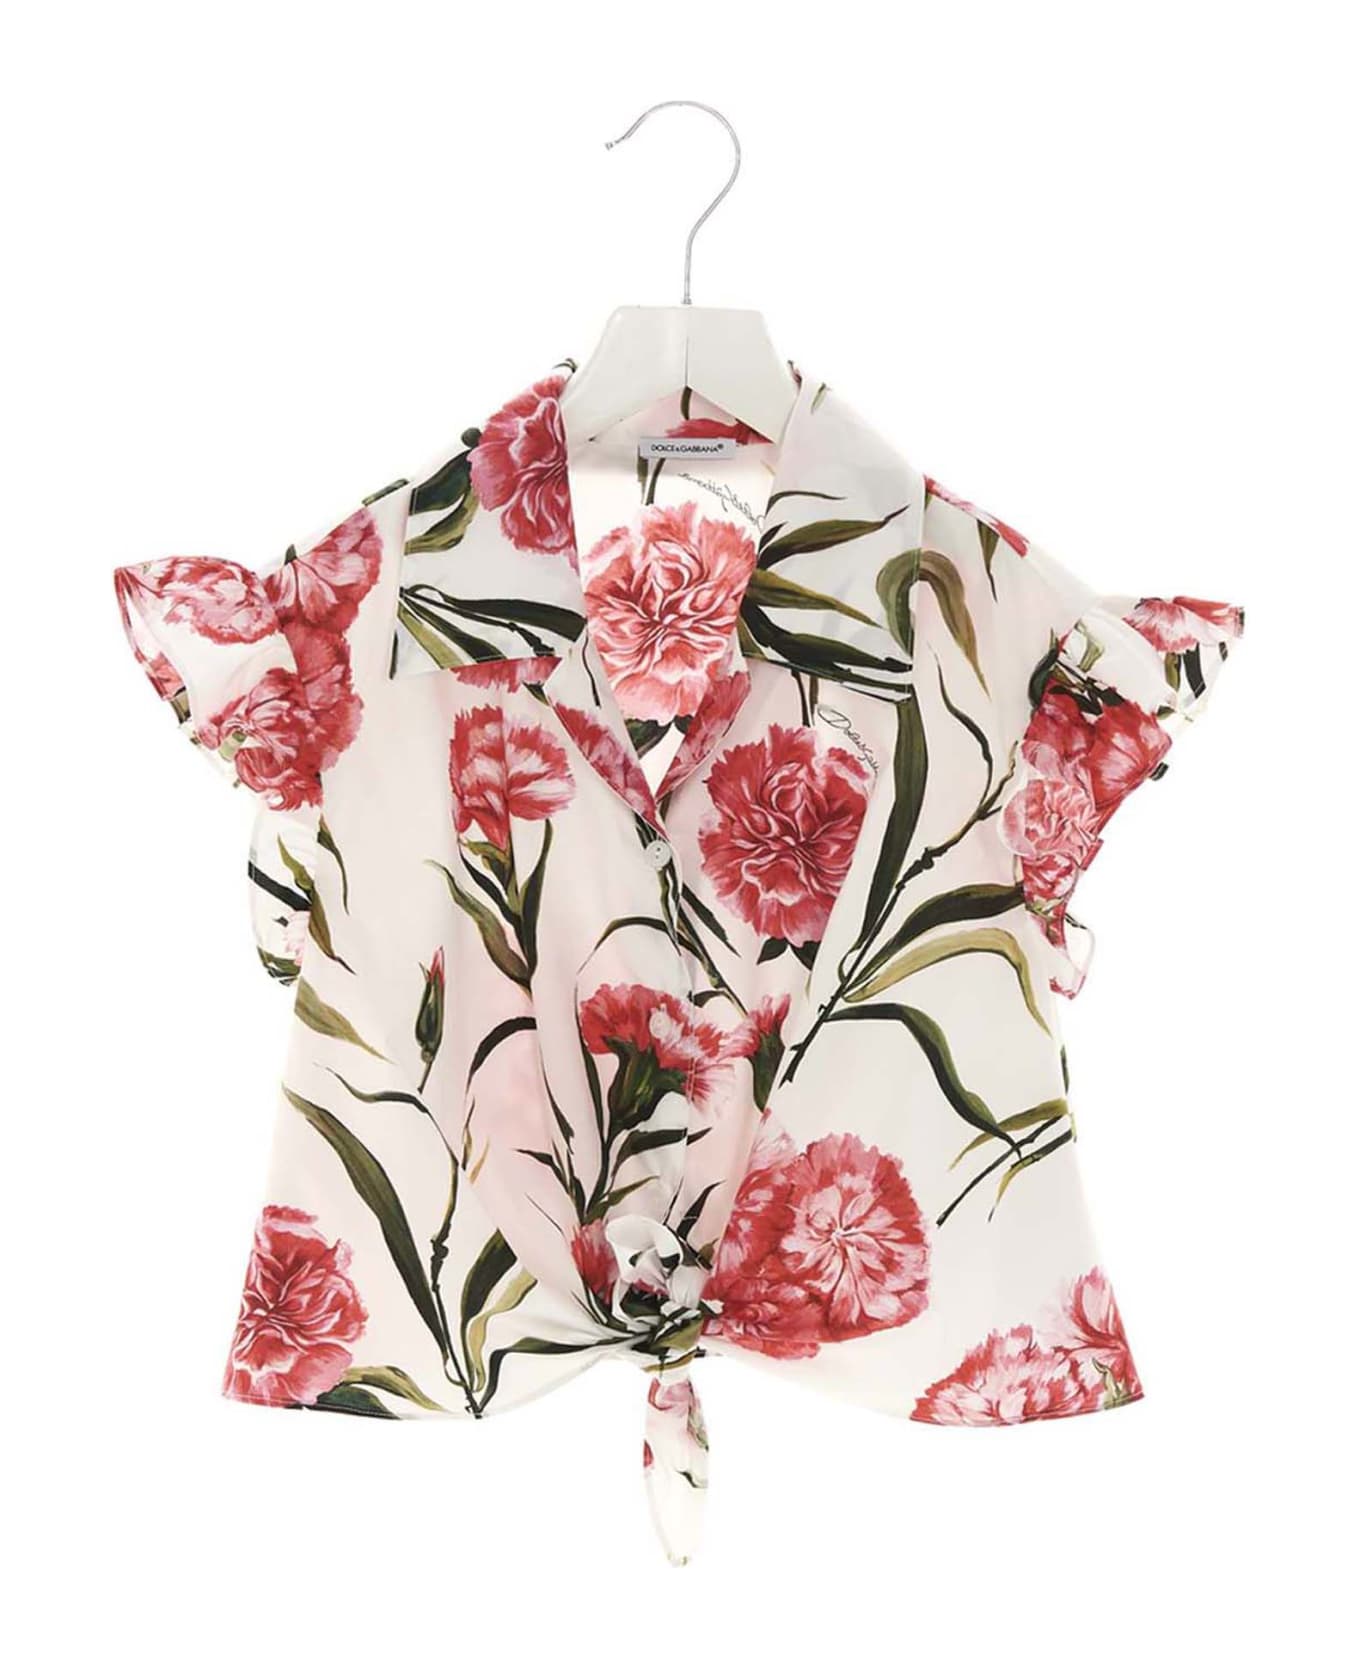 Dolce & Gabbana Floral Shirt - WHITE/RED